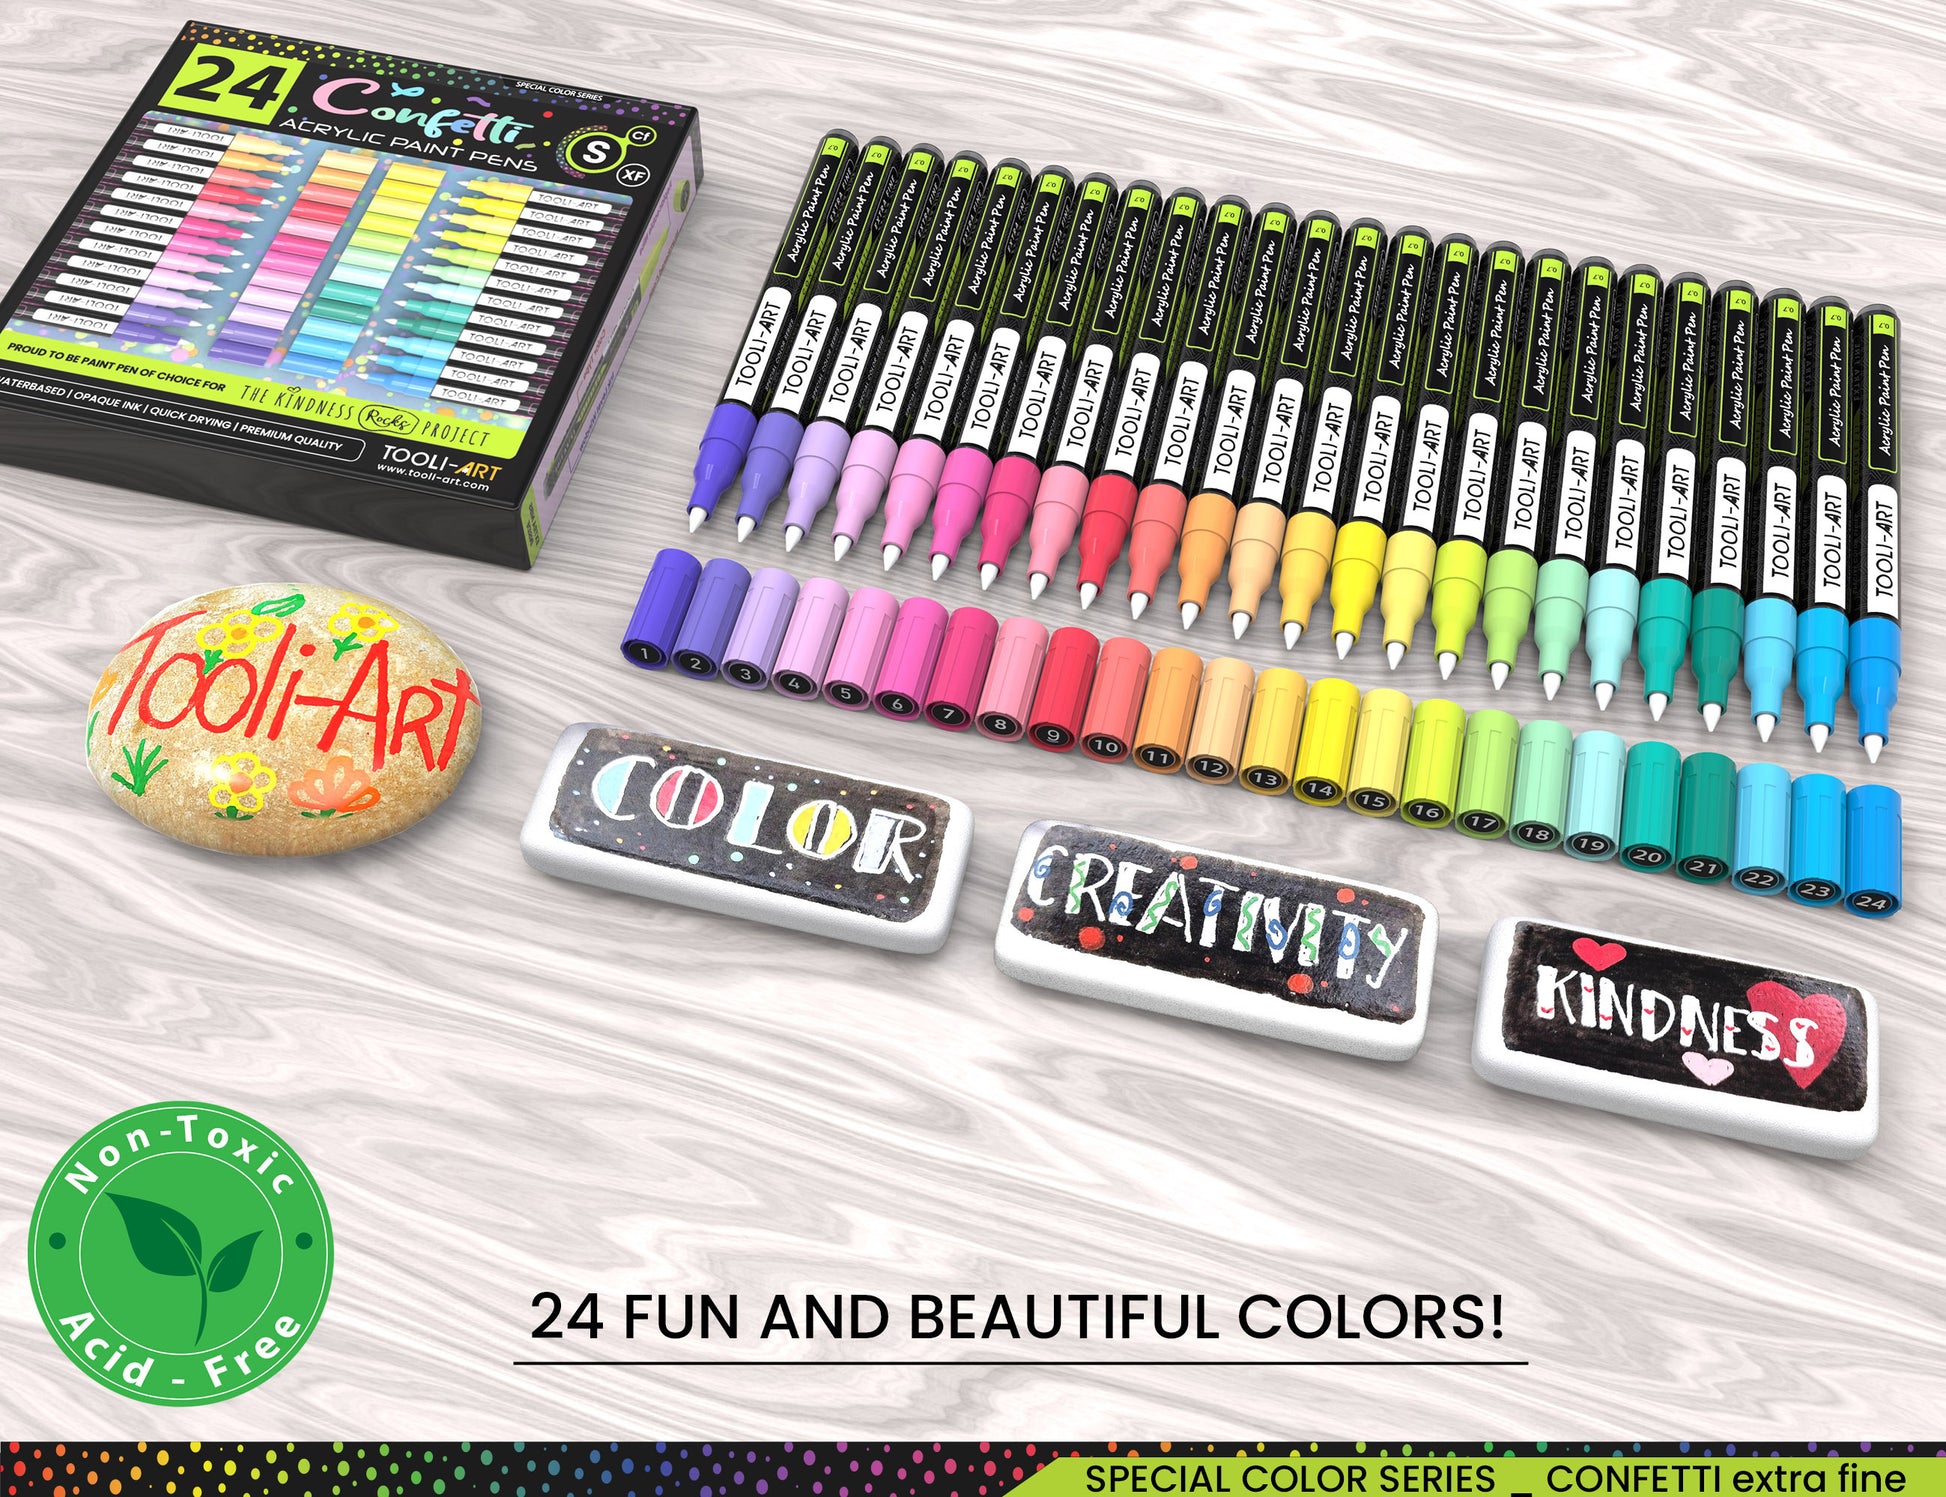 28 Southwestern Colors Acrylic Paint Pens Studio Color Series Markers –  TOOLI-ART